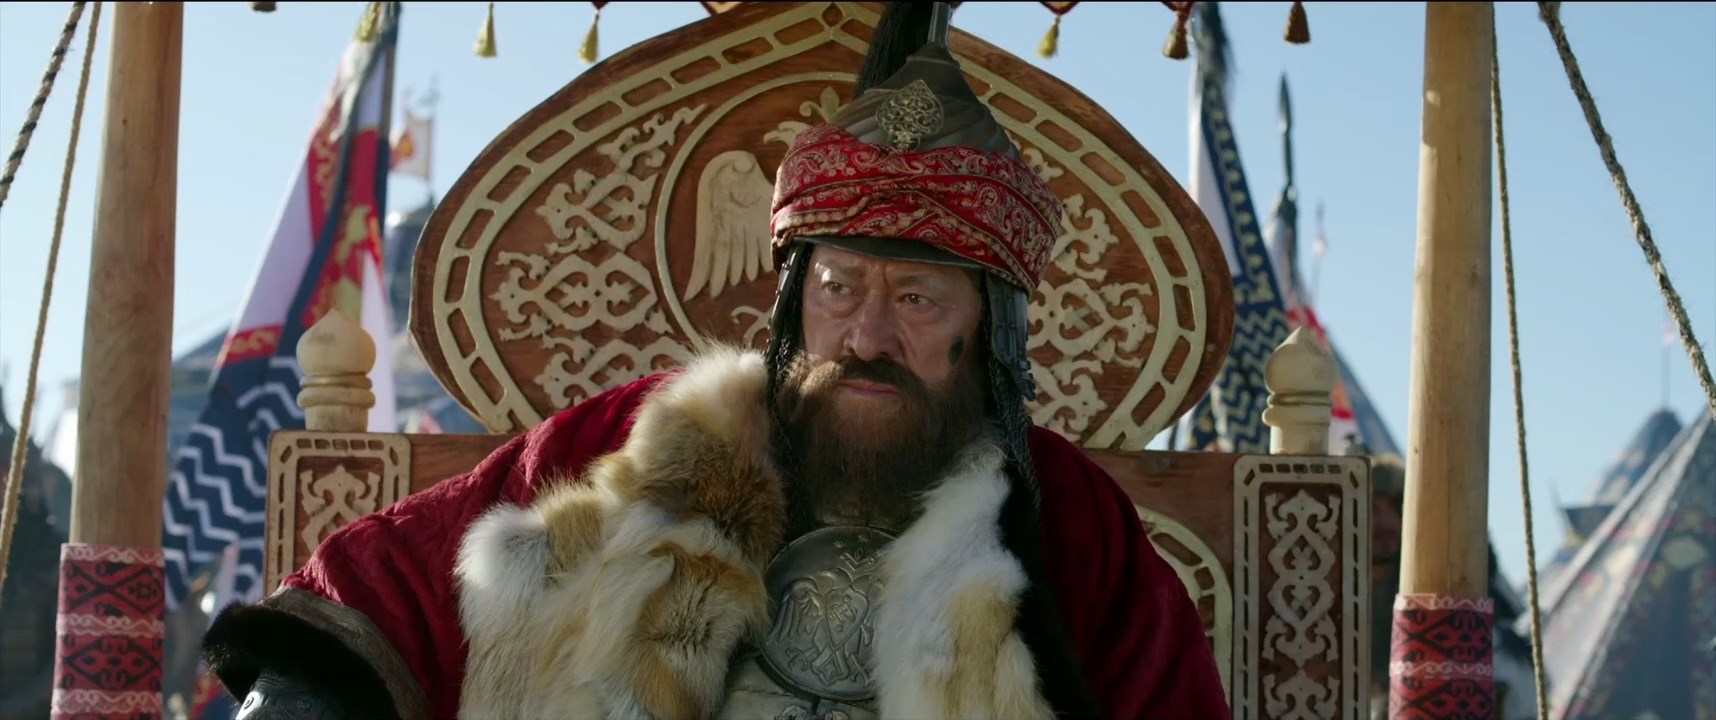 Kazakh-Khanate-The-Golden-Throne-2019-Telugu-Dubbed-Movie-Screen-Shot-5.jpeg